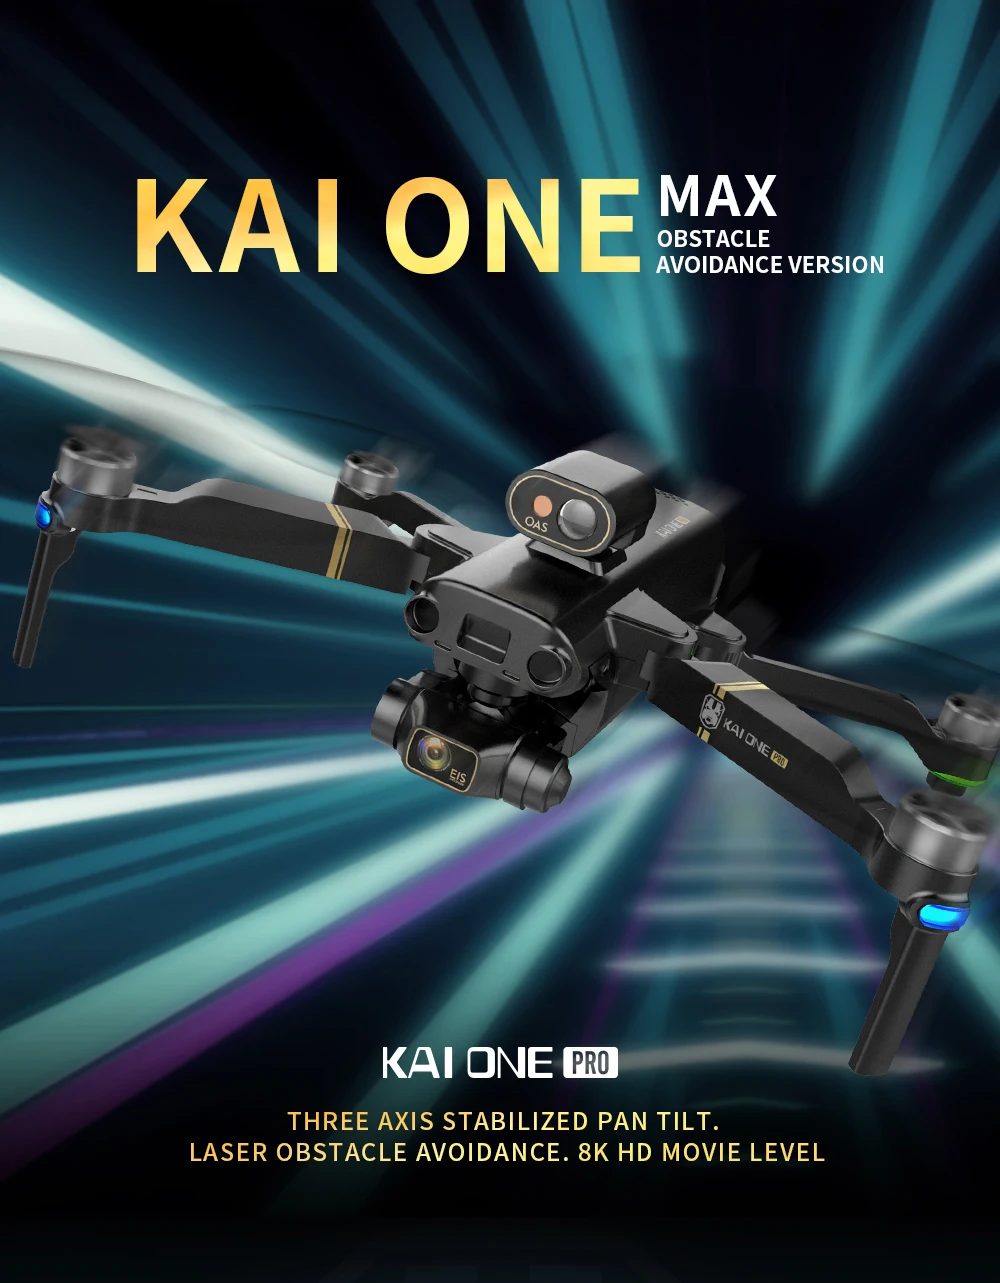 KAI ONE MAX Drone, MAX KAI ONE OBSTACLE AVOIDANCE VERSION .